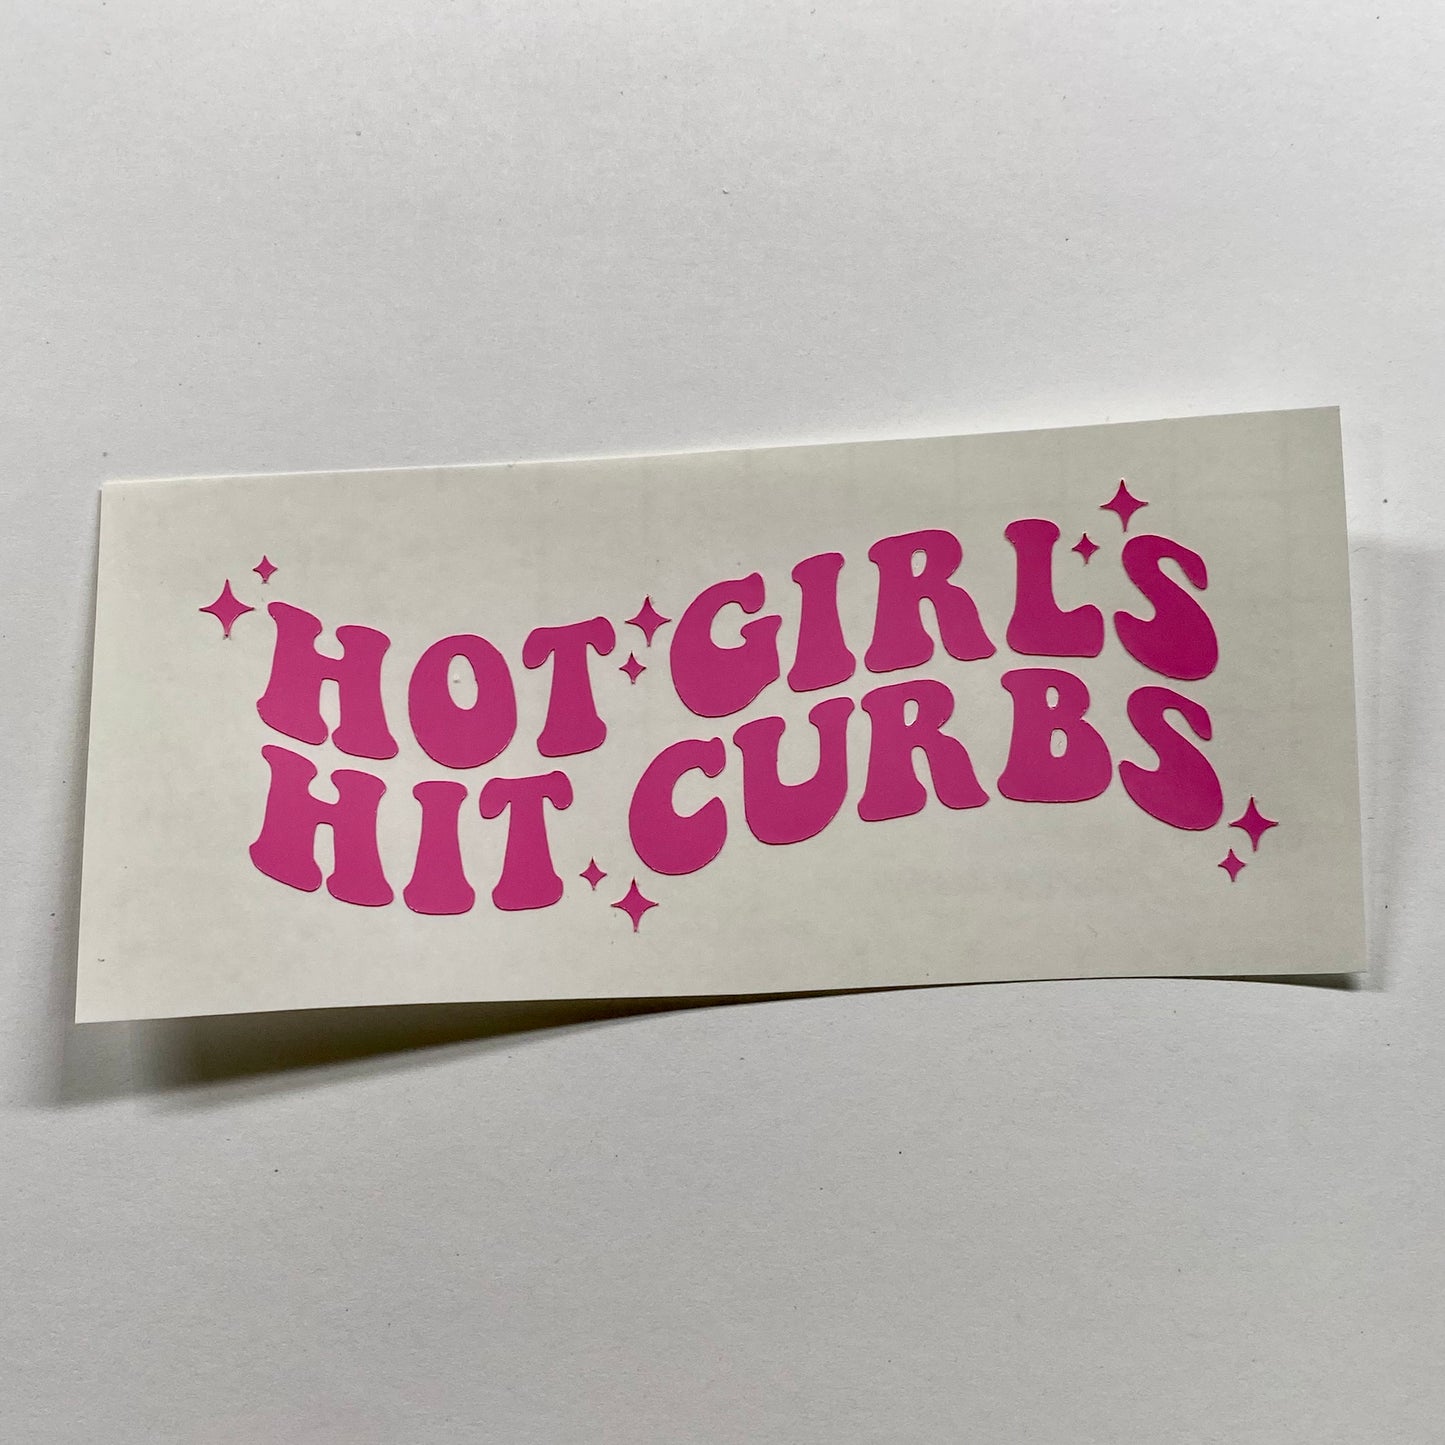 Vinyl Decal - Hot girls hit curbs